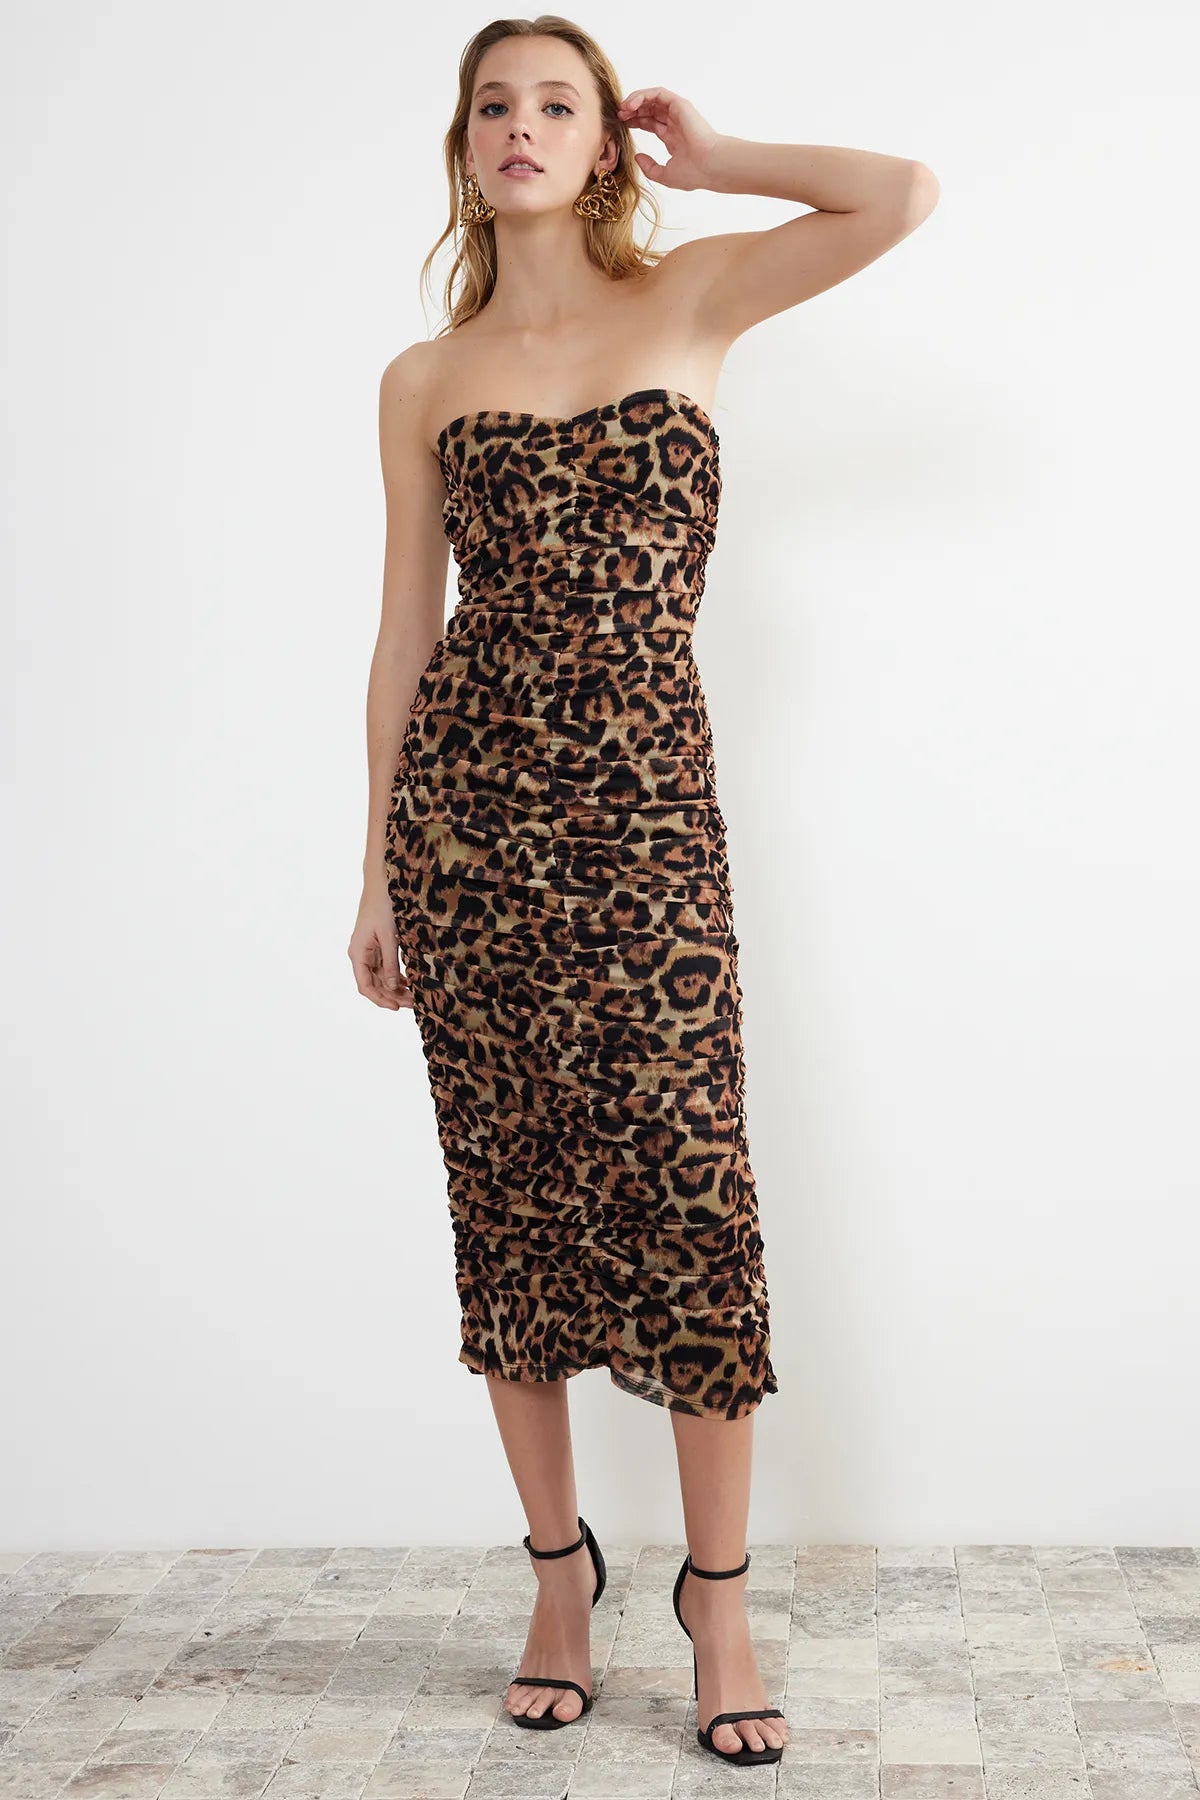 Leopard Patterned Dress noxlook